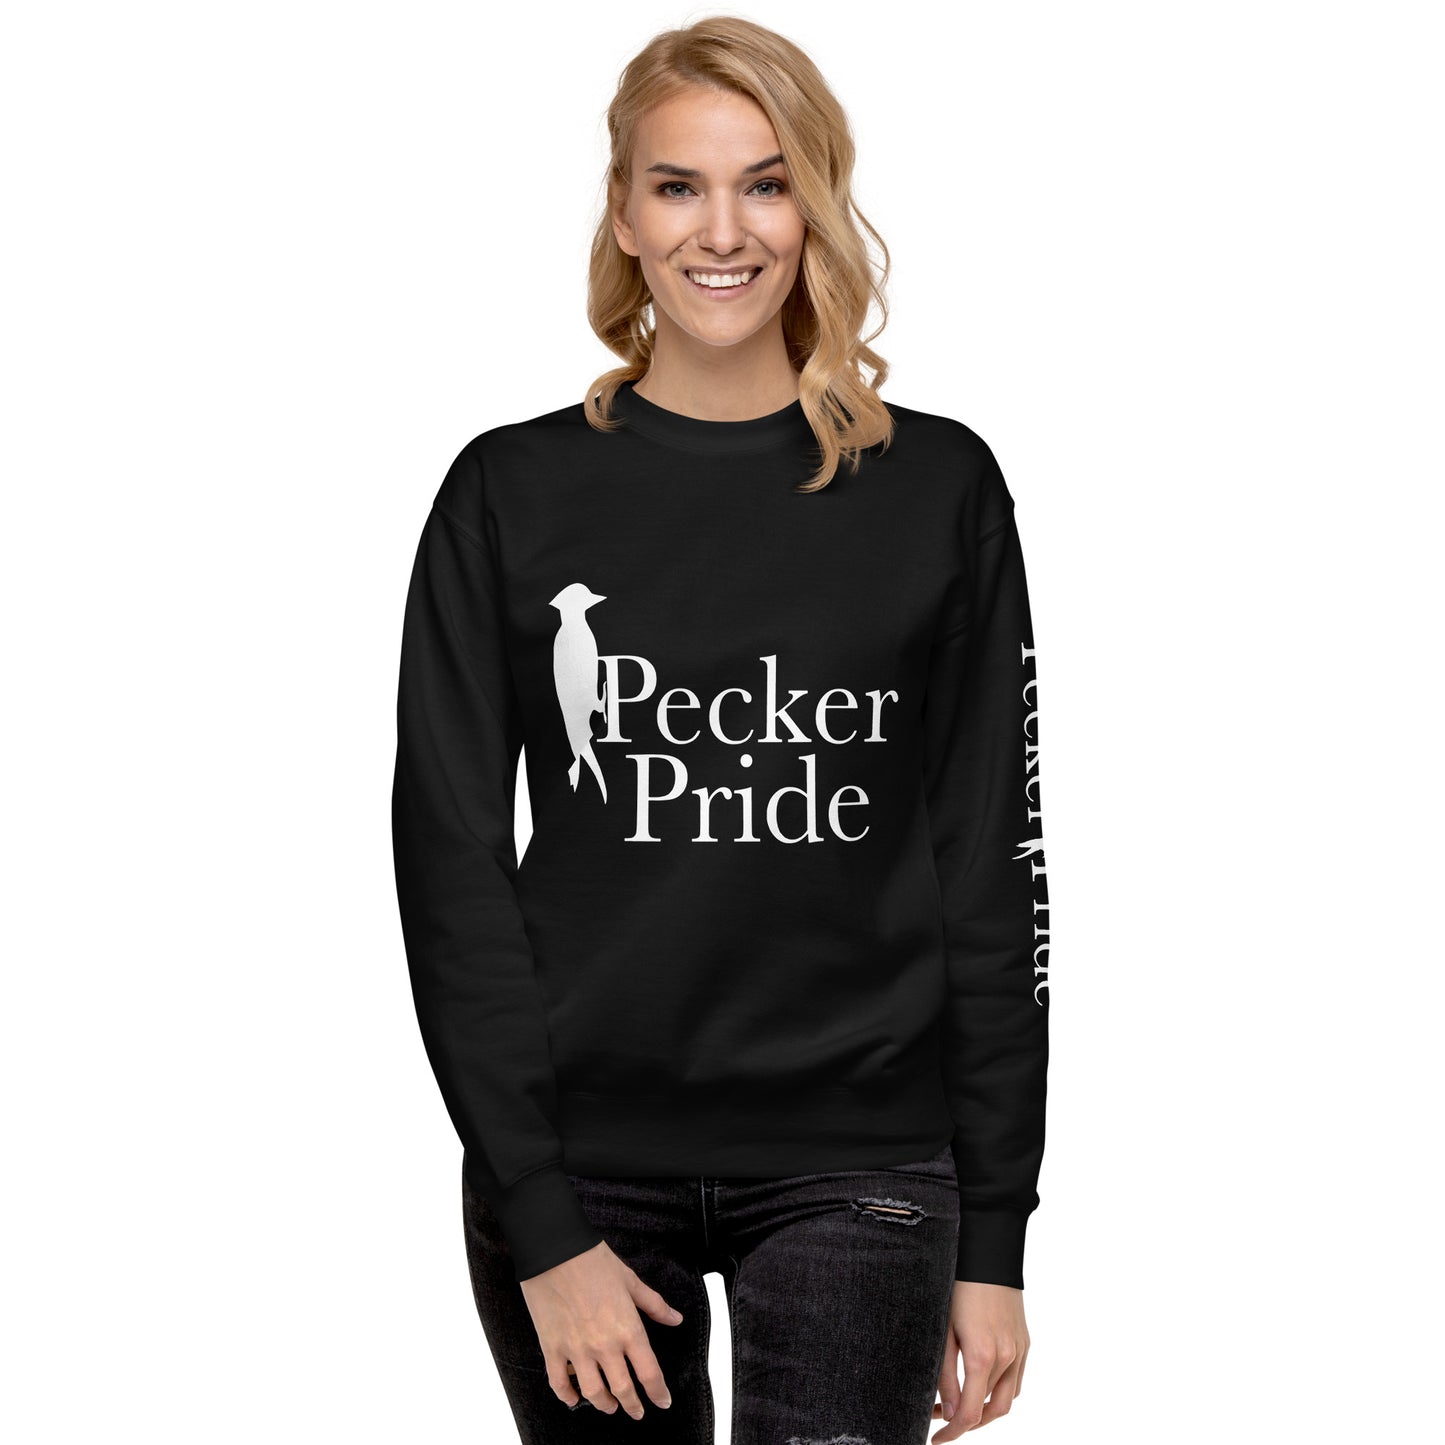 Pecker Pride Dark Premium Sweatshirt